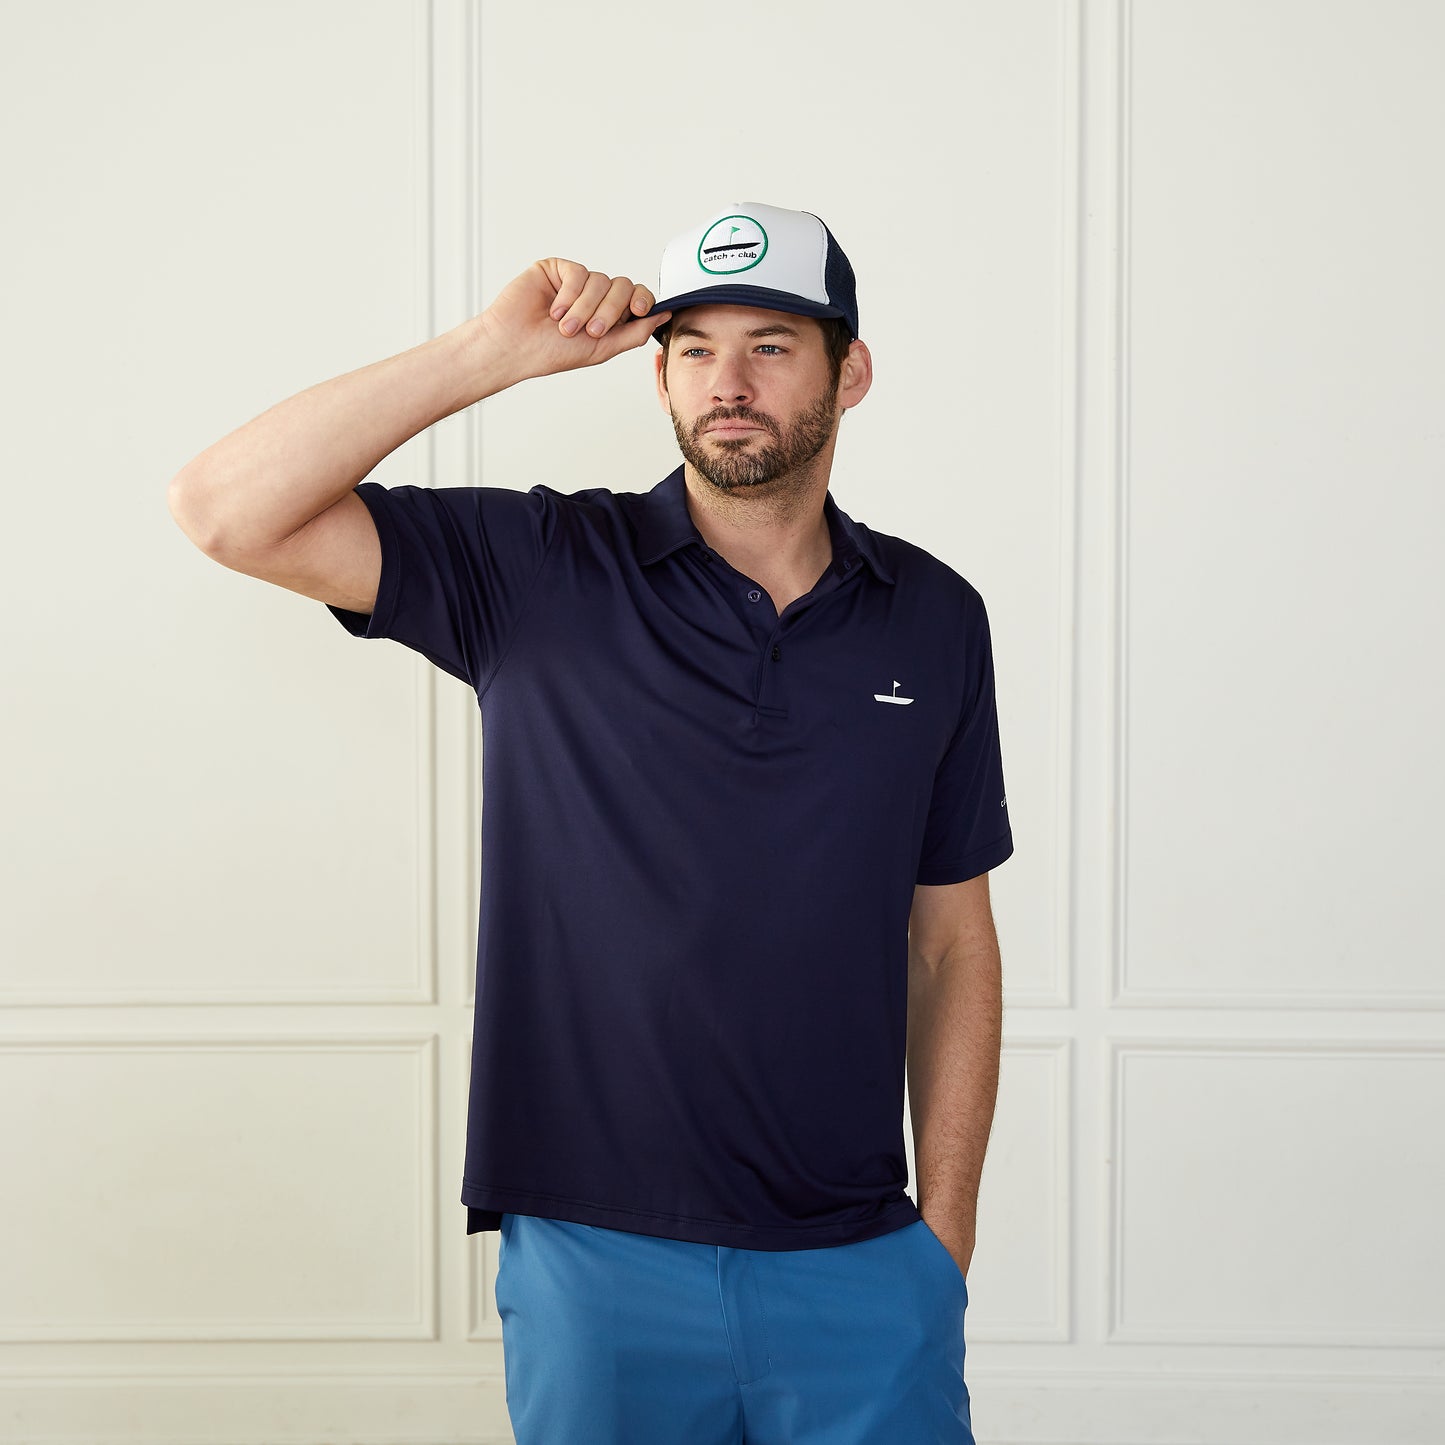 Performance Golf Shirt - Navy